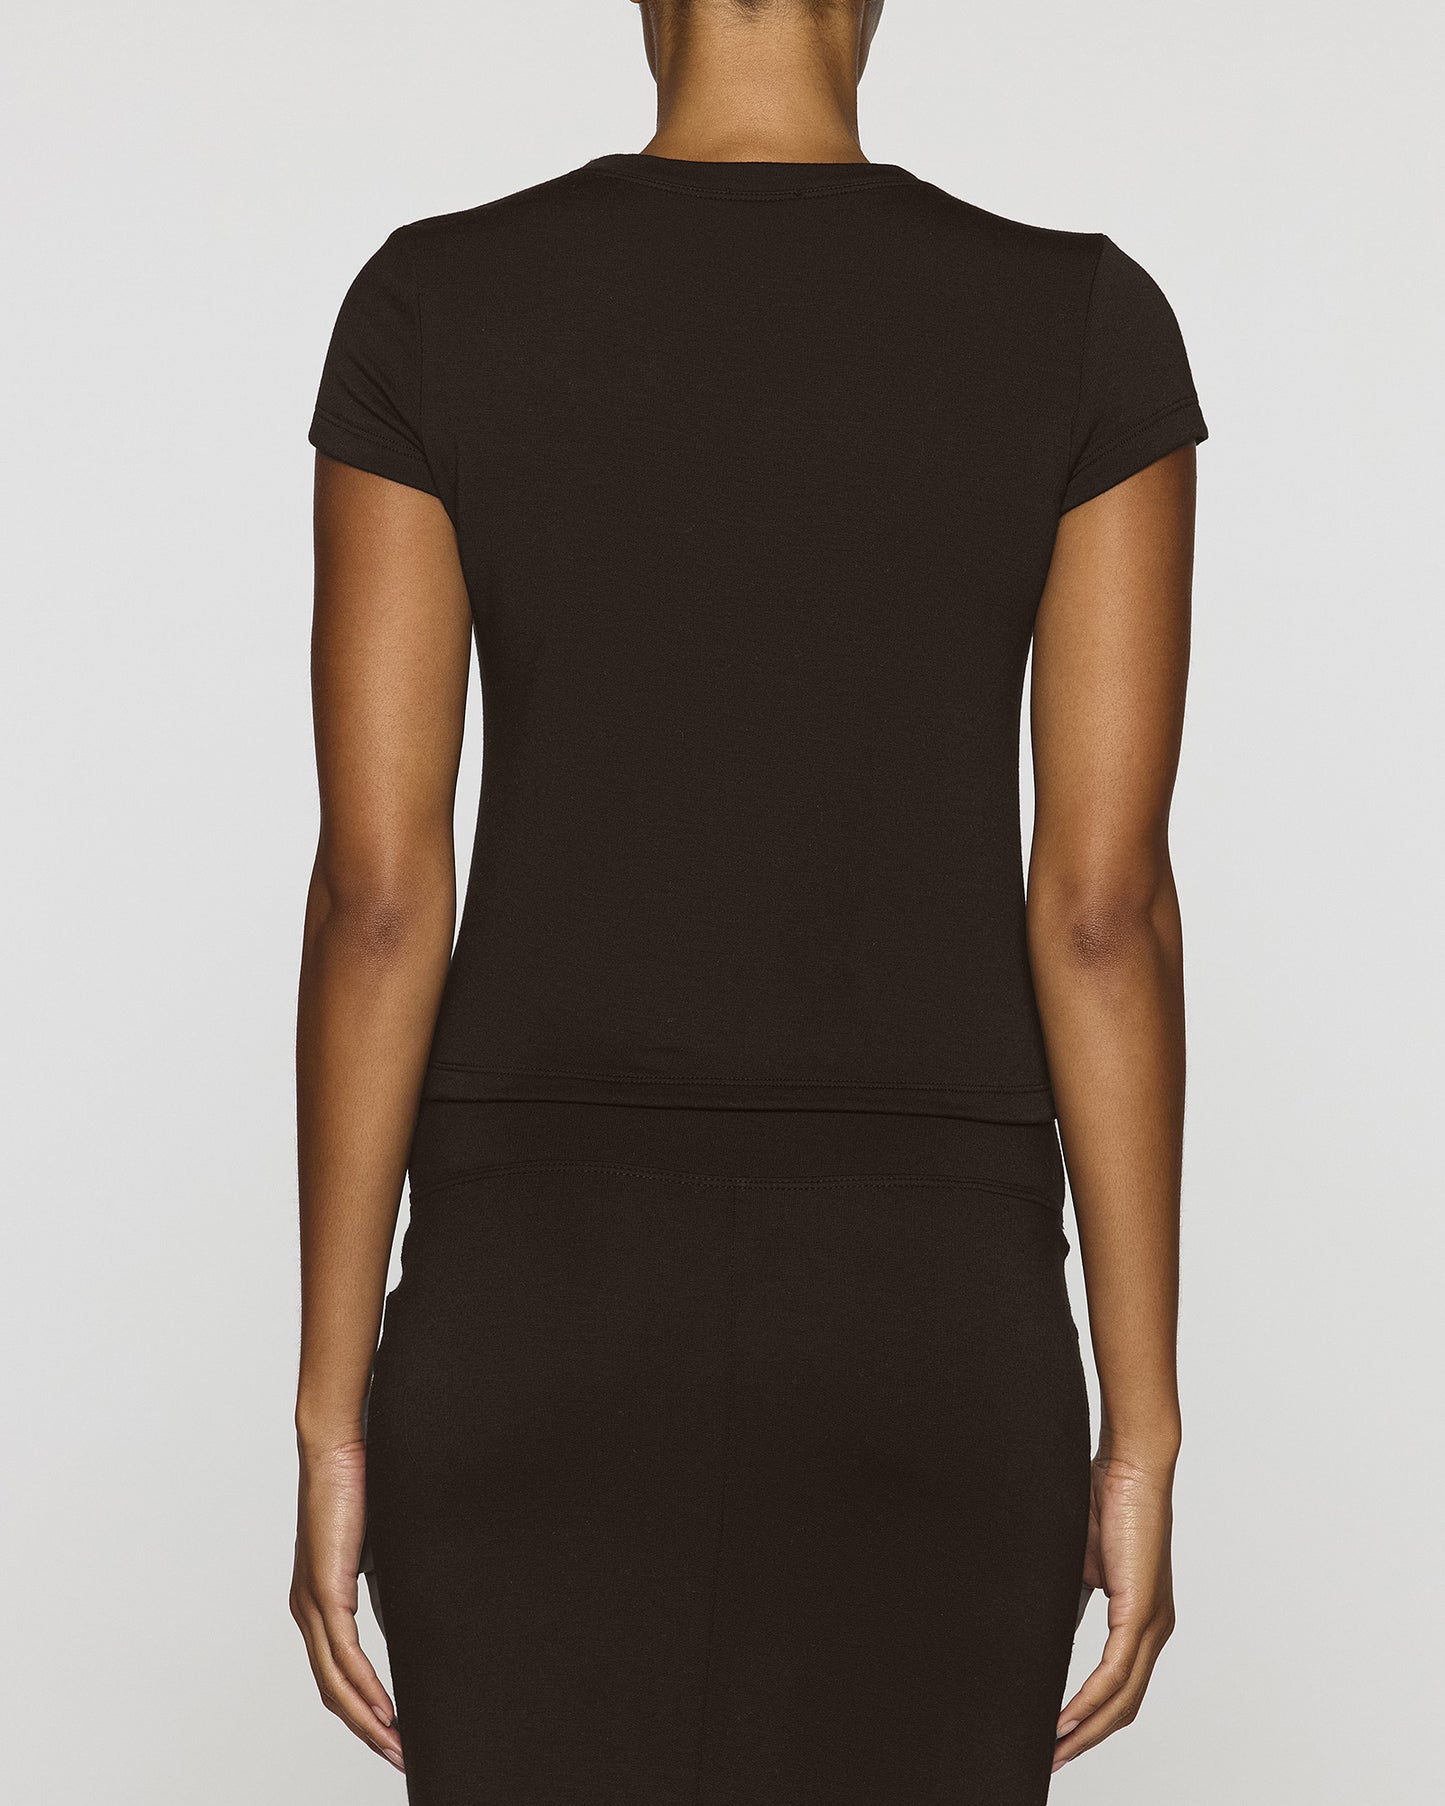 Calvin Klein Women's Cotton Short Sleeve V-Neck T-Shirts Top Black L, $30  NWT 